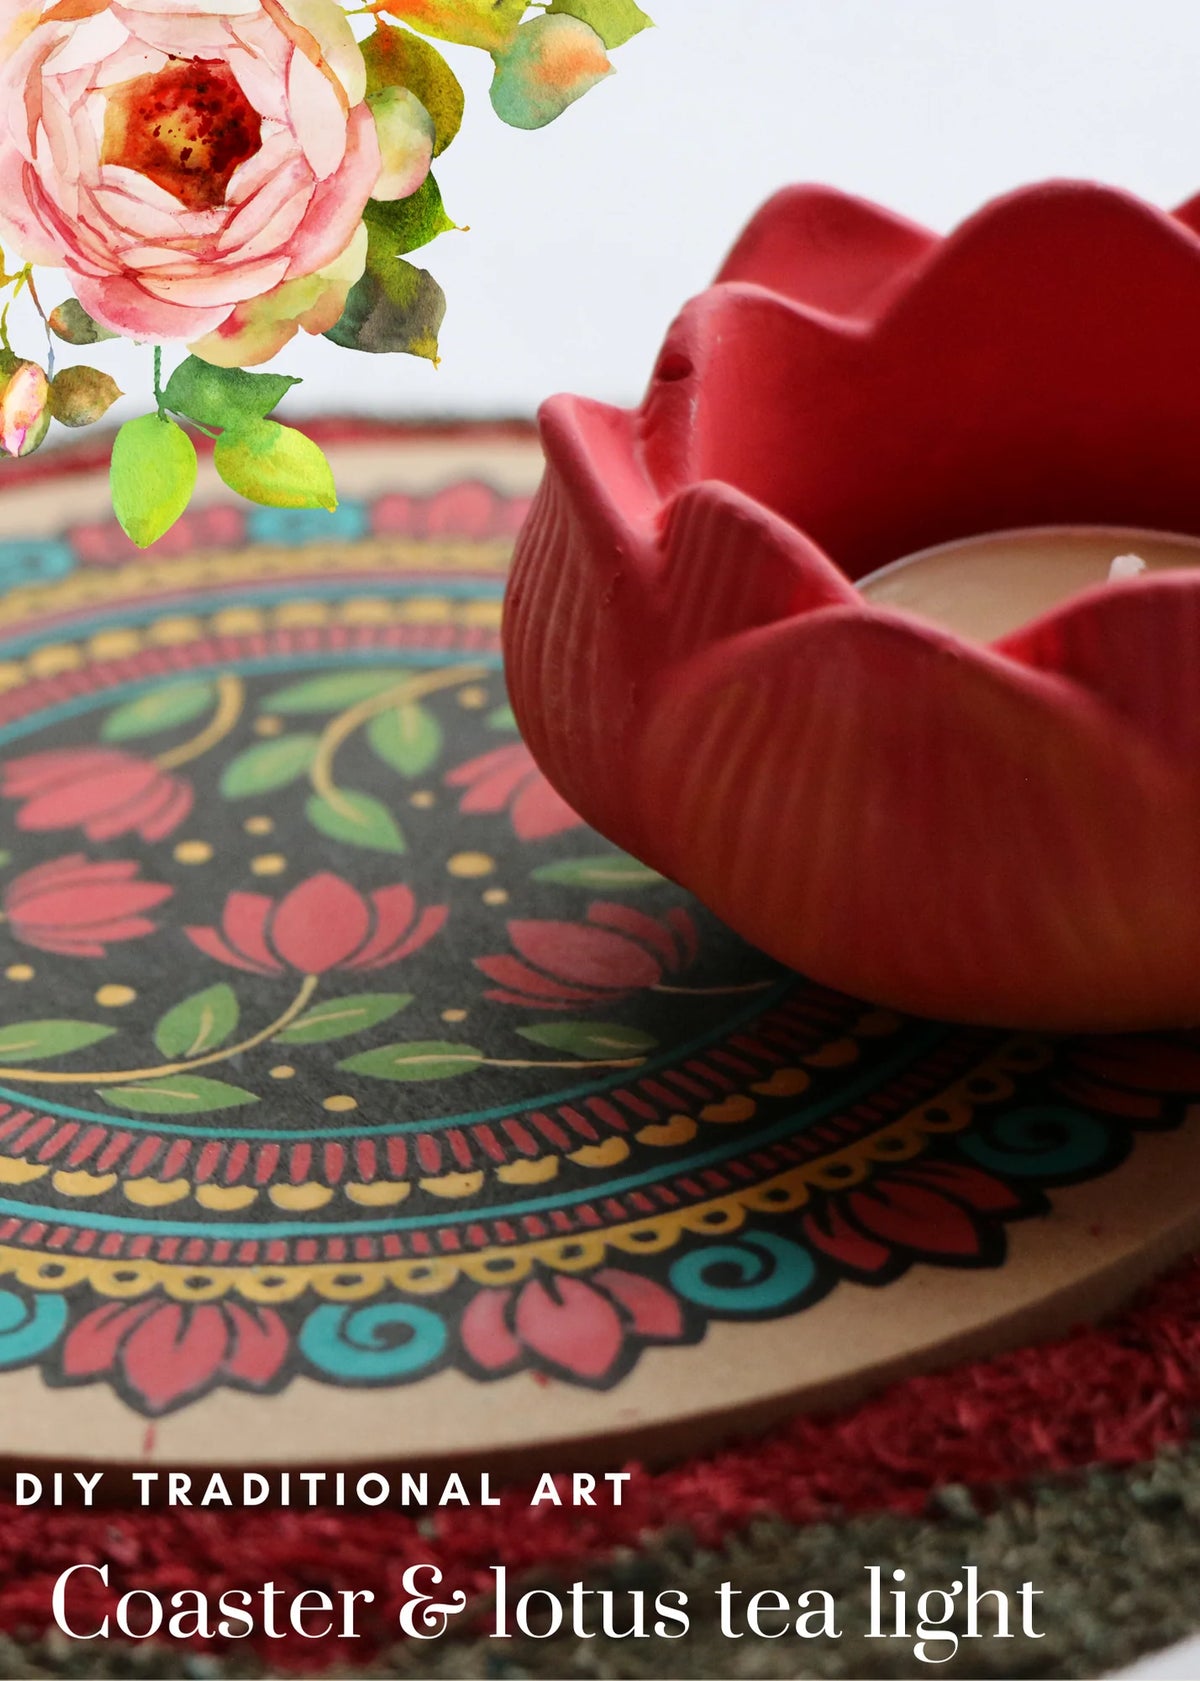 Craftopedia "DIY Traditional Art Coaster & Lotus Tea Light Holder"